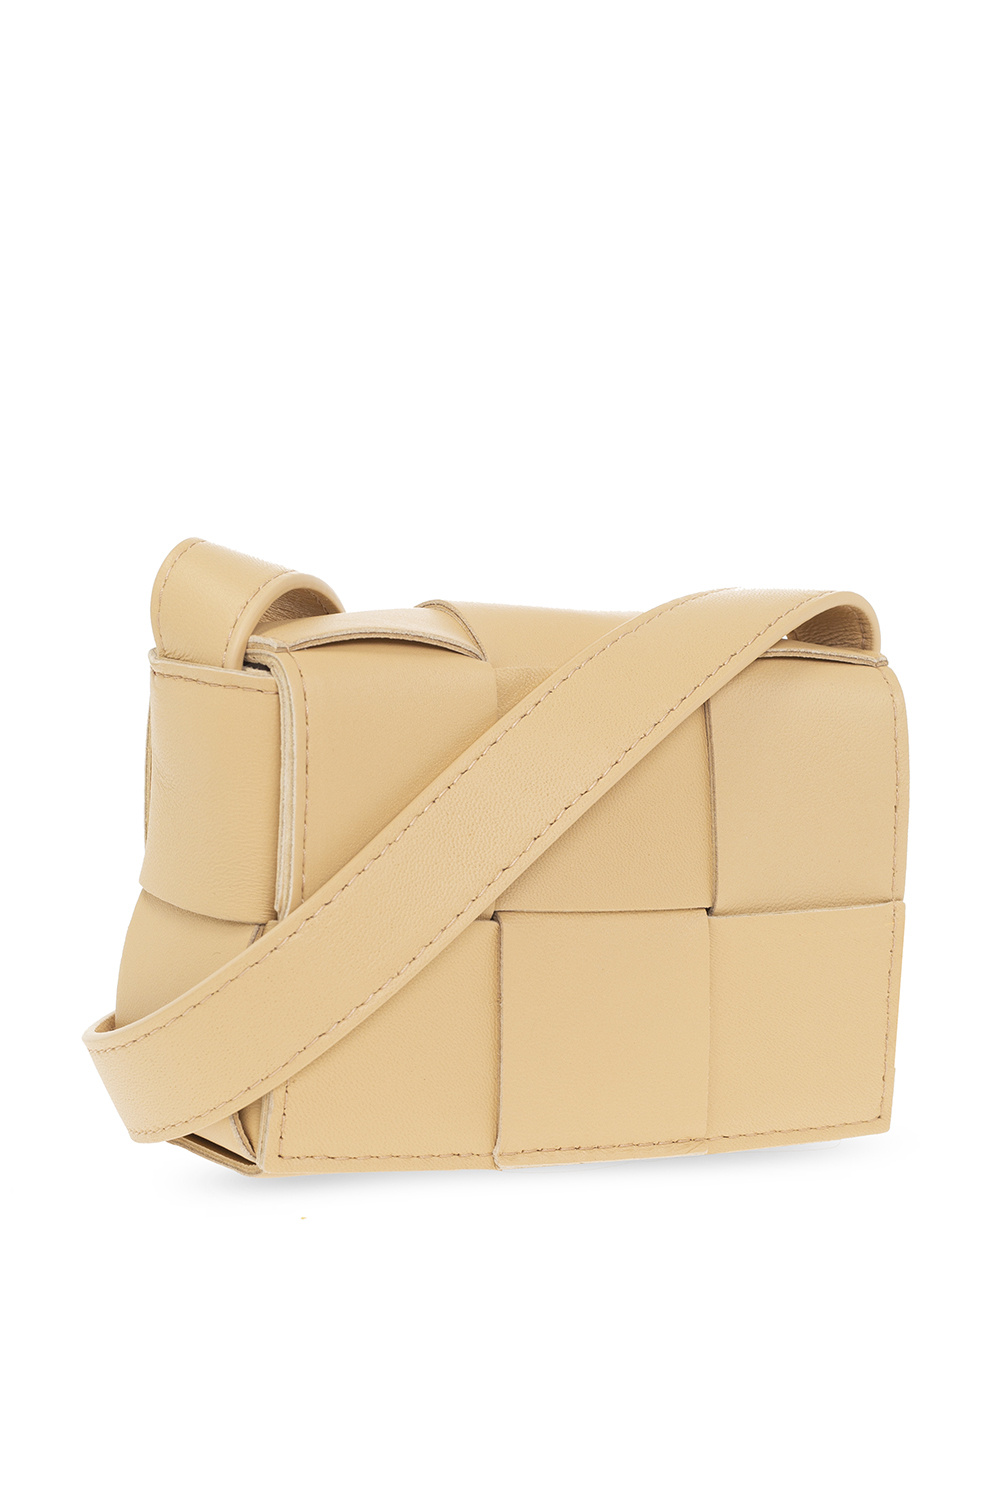 Bottega Veneta ‘Cassette Candy’ shoulder bag